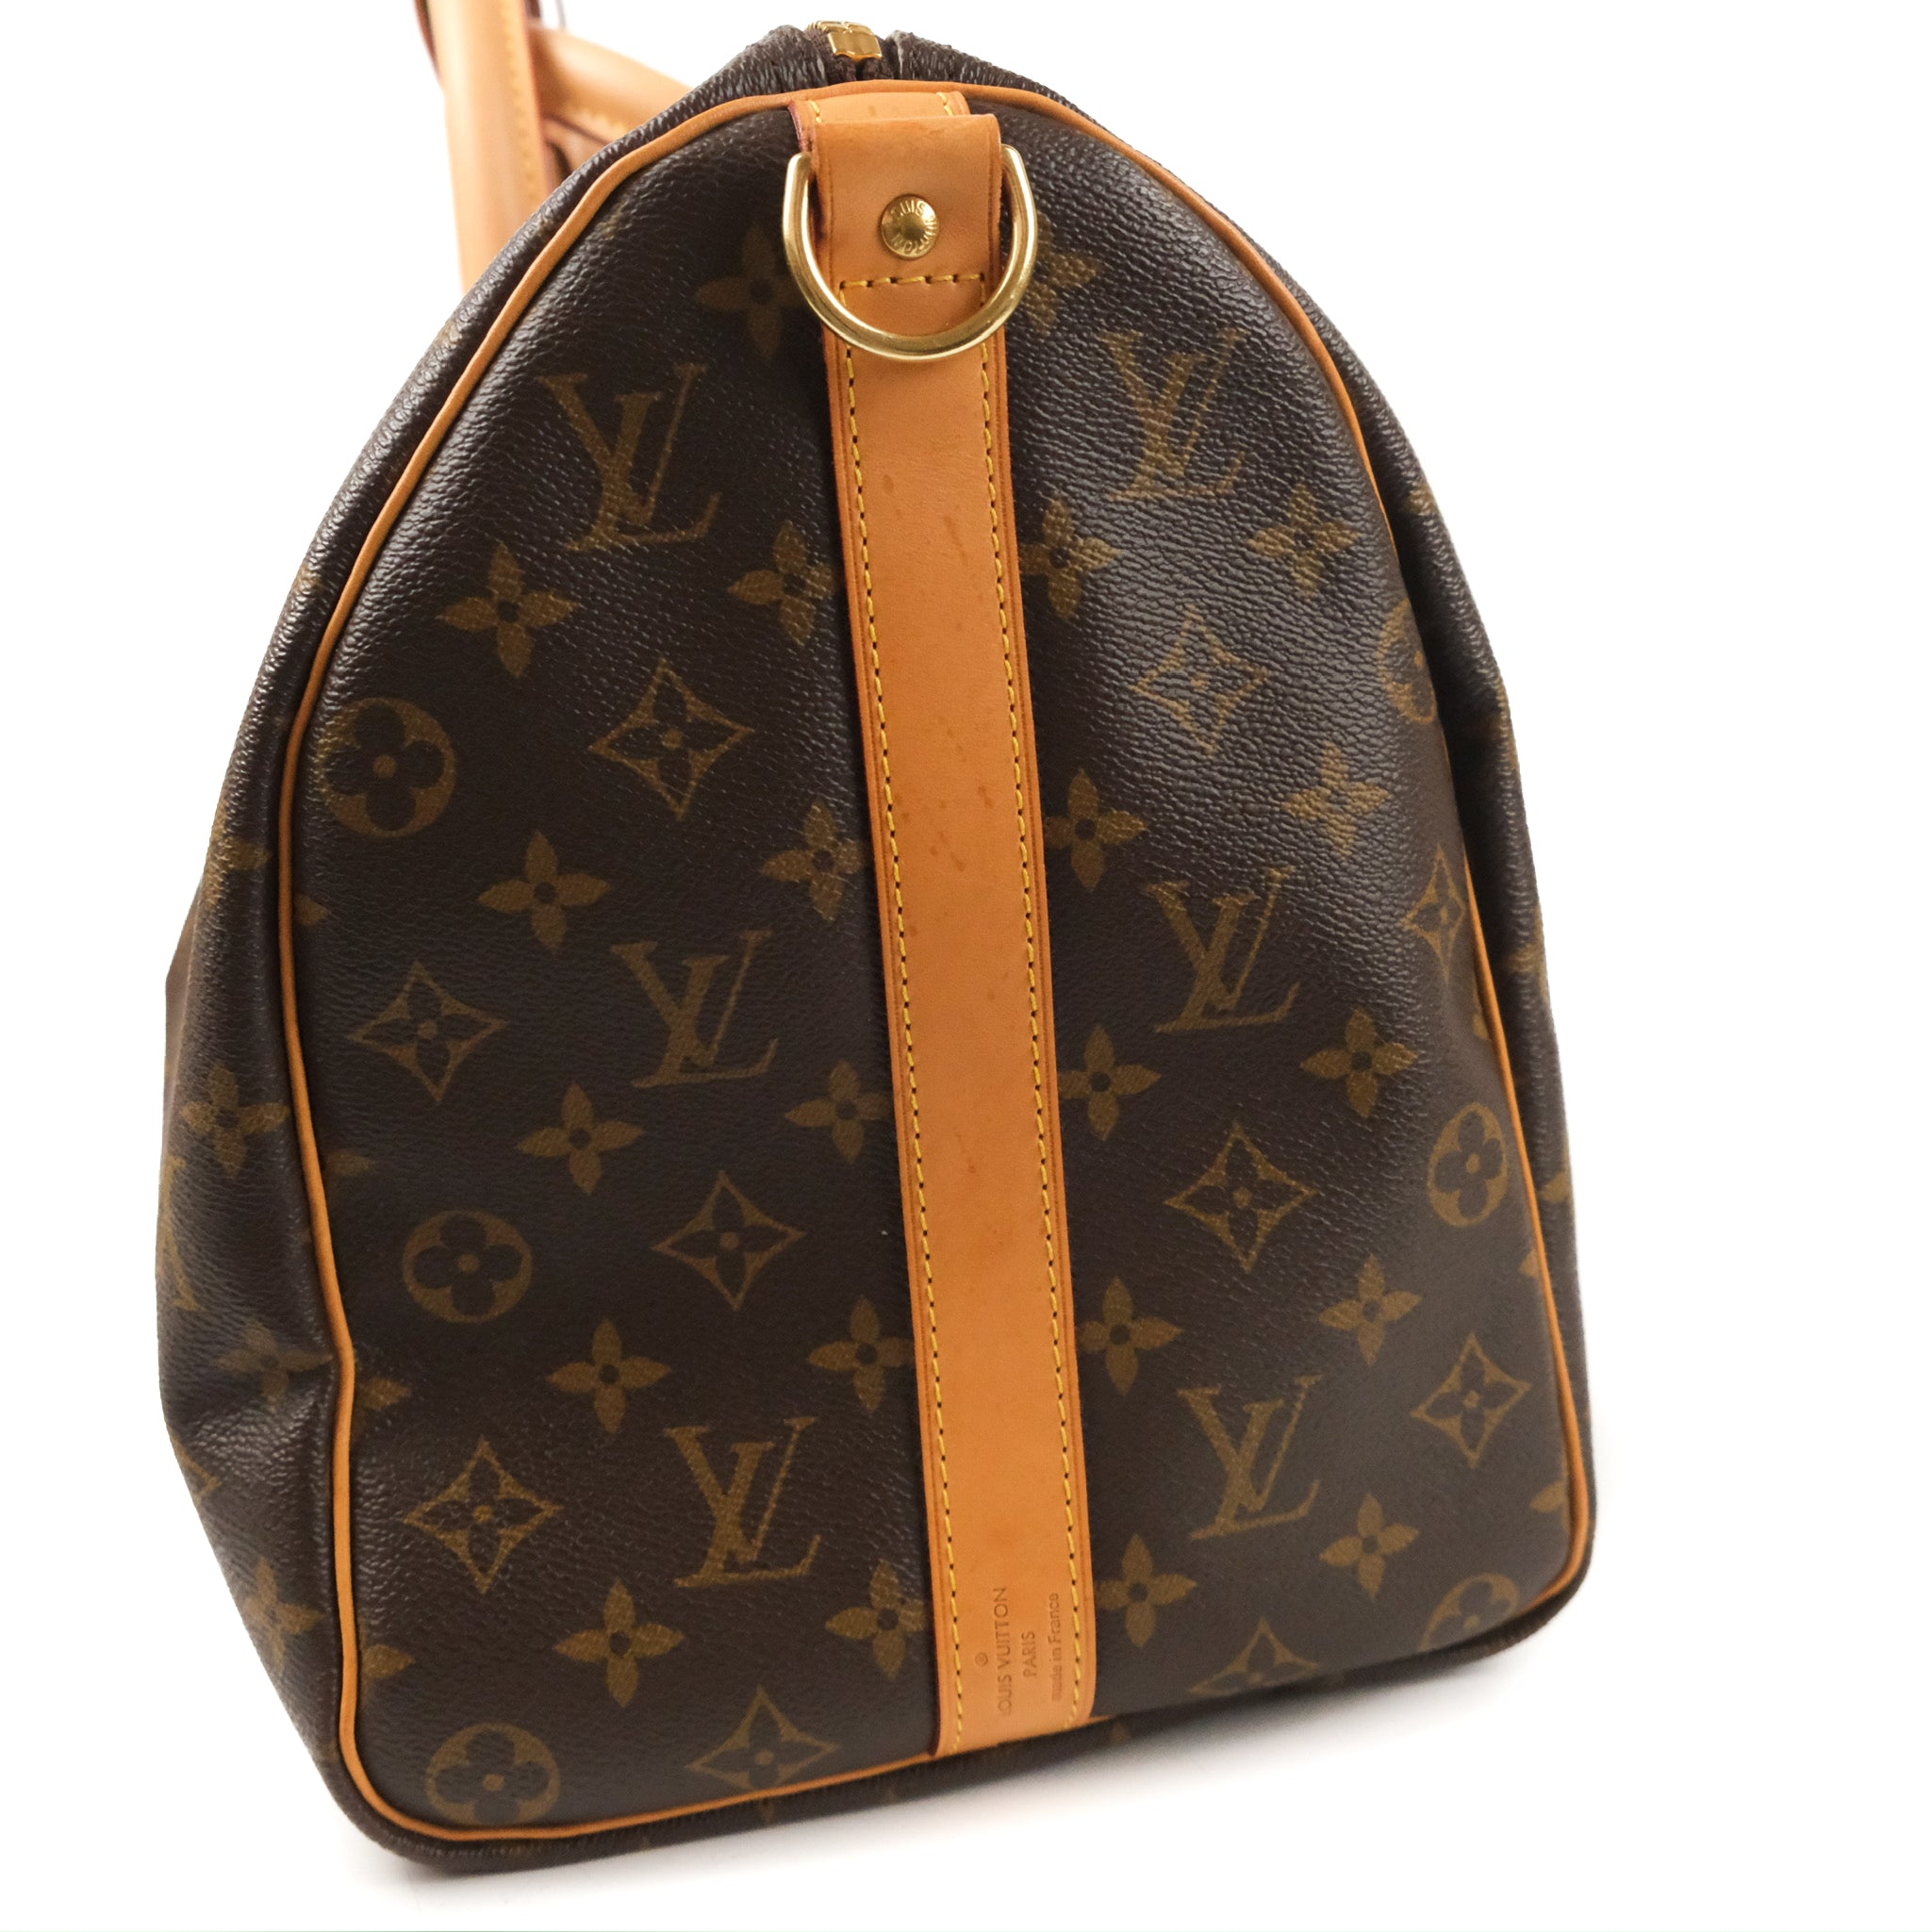 Louis+Vuitton+Keepall+Duffle+45+Brown+Canvas+Monogram for sale